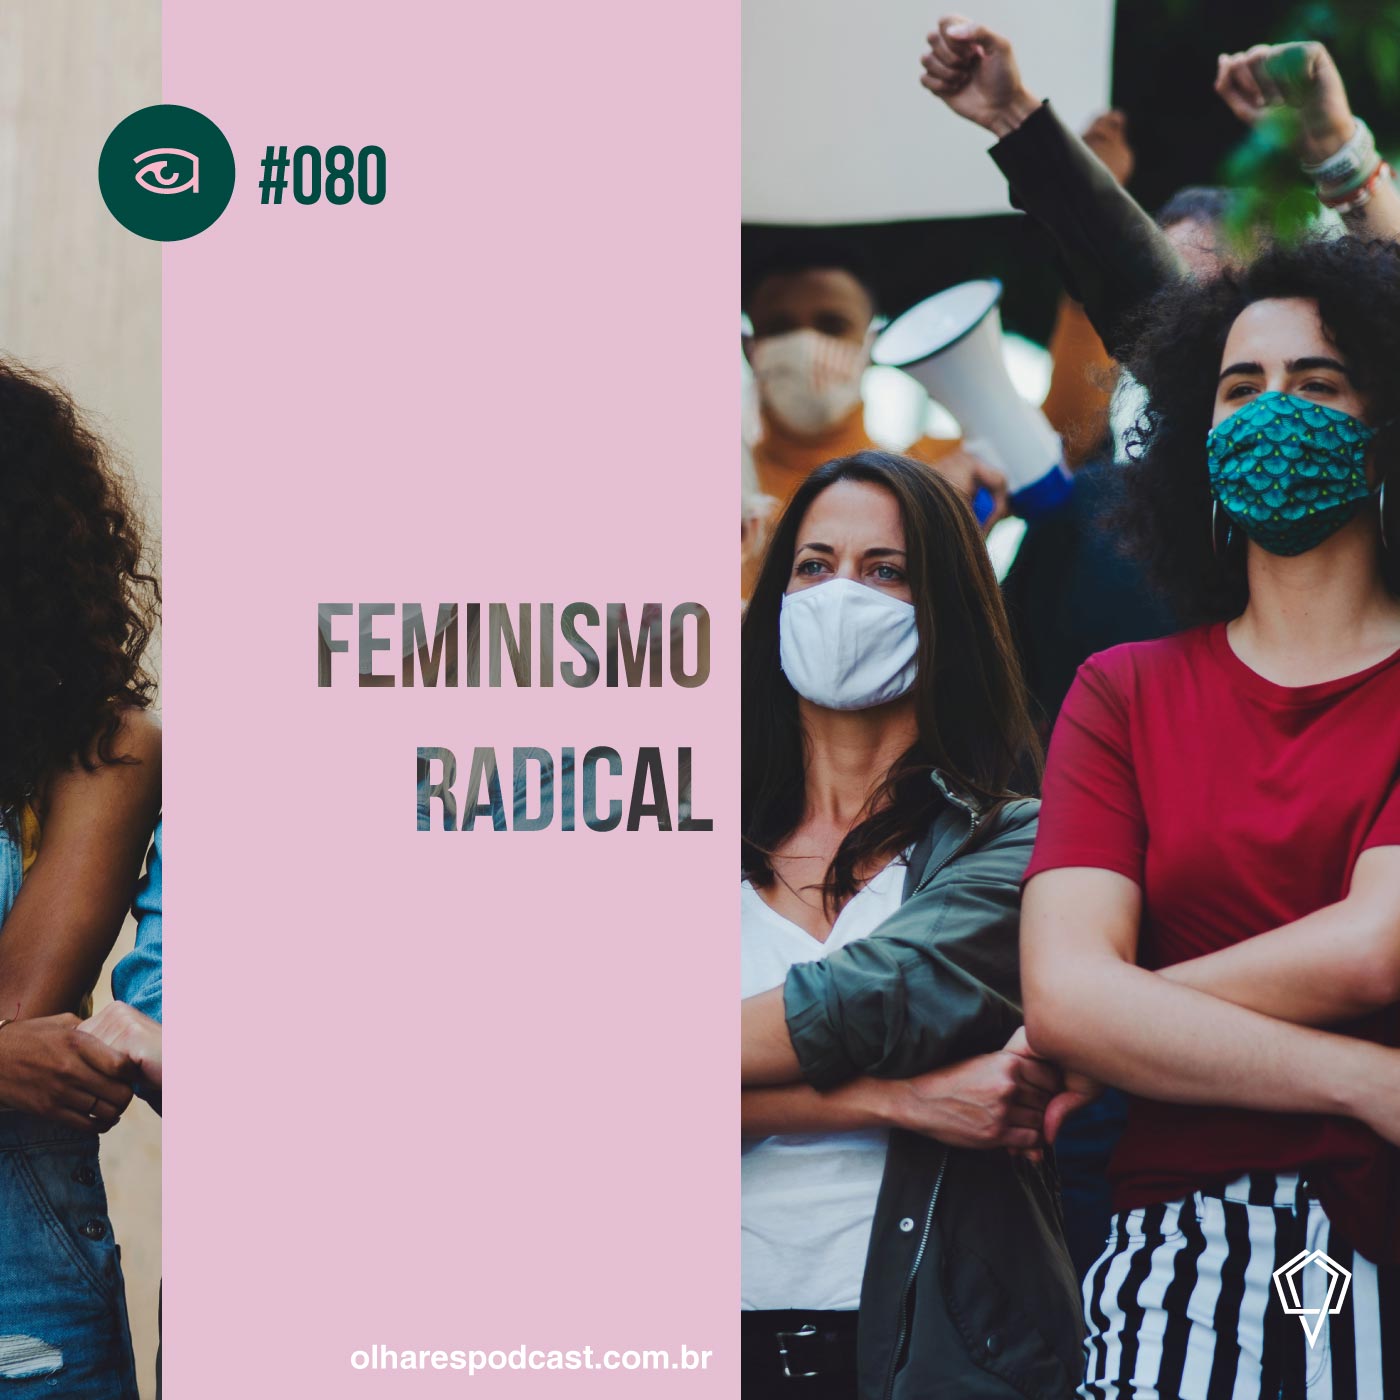 Olhares #080 Feminismo radical